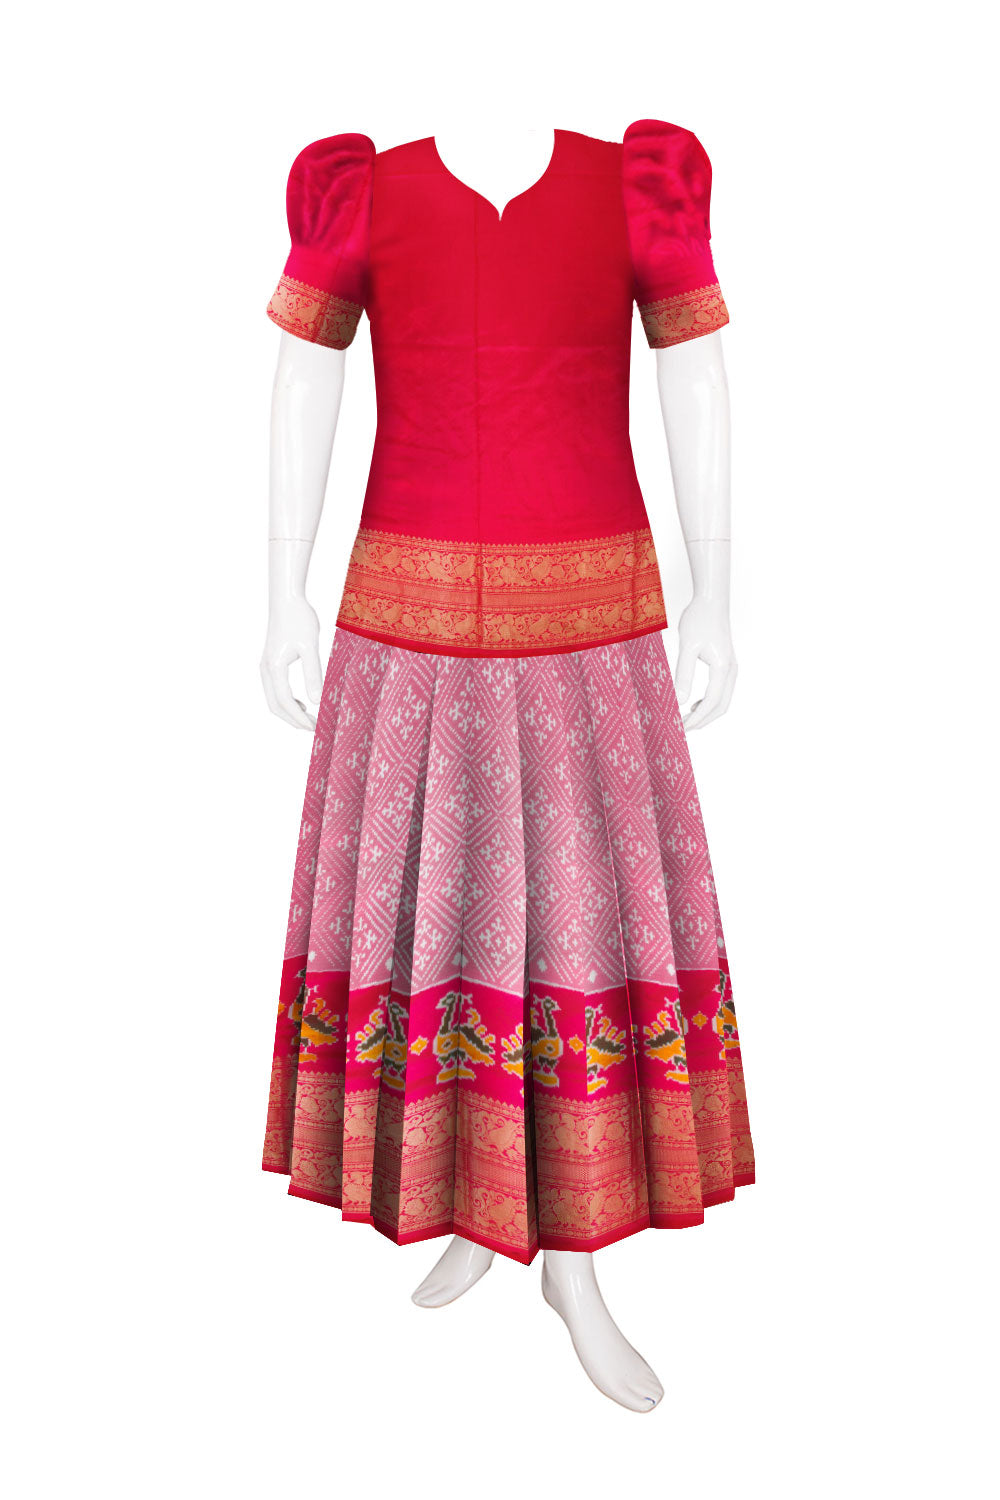 Pink Ikat Pattu Pavadai Material - Avishya